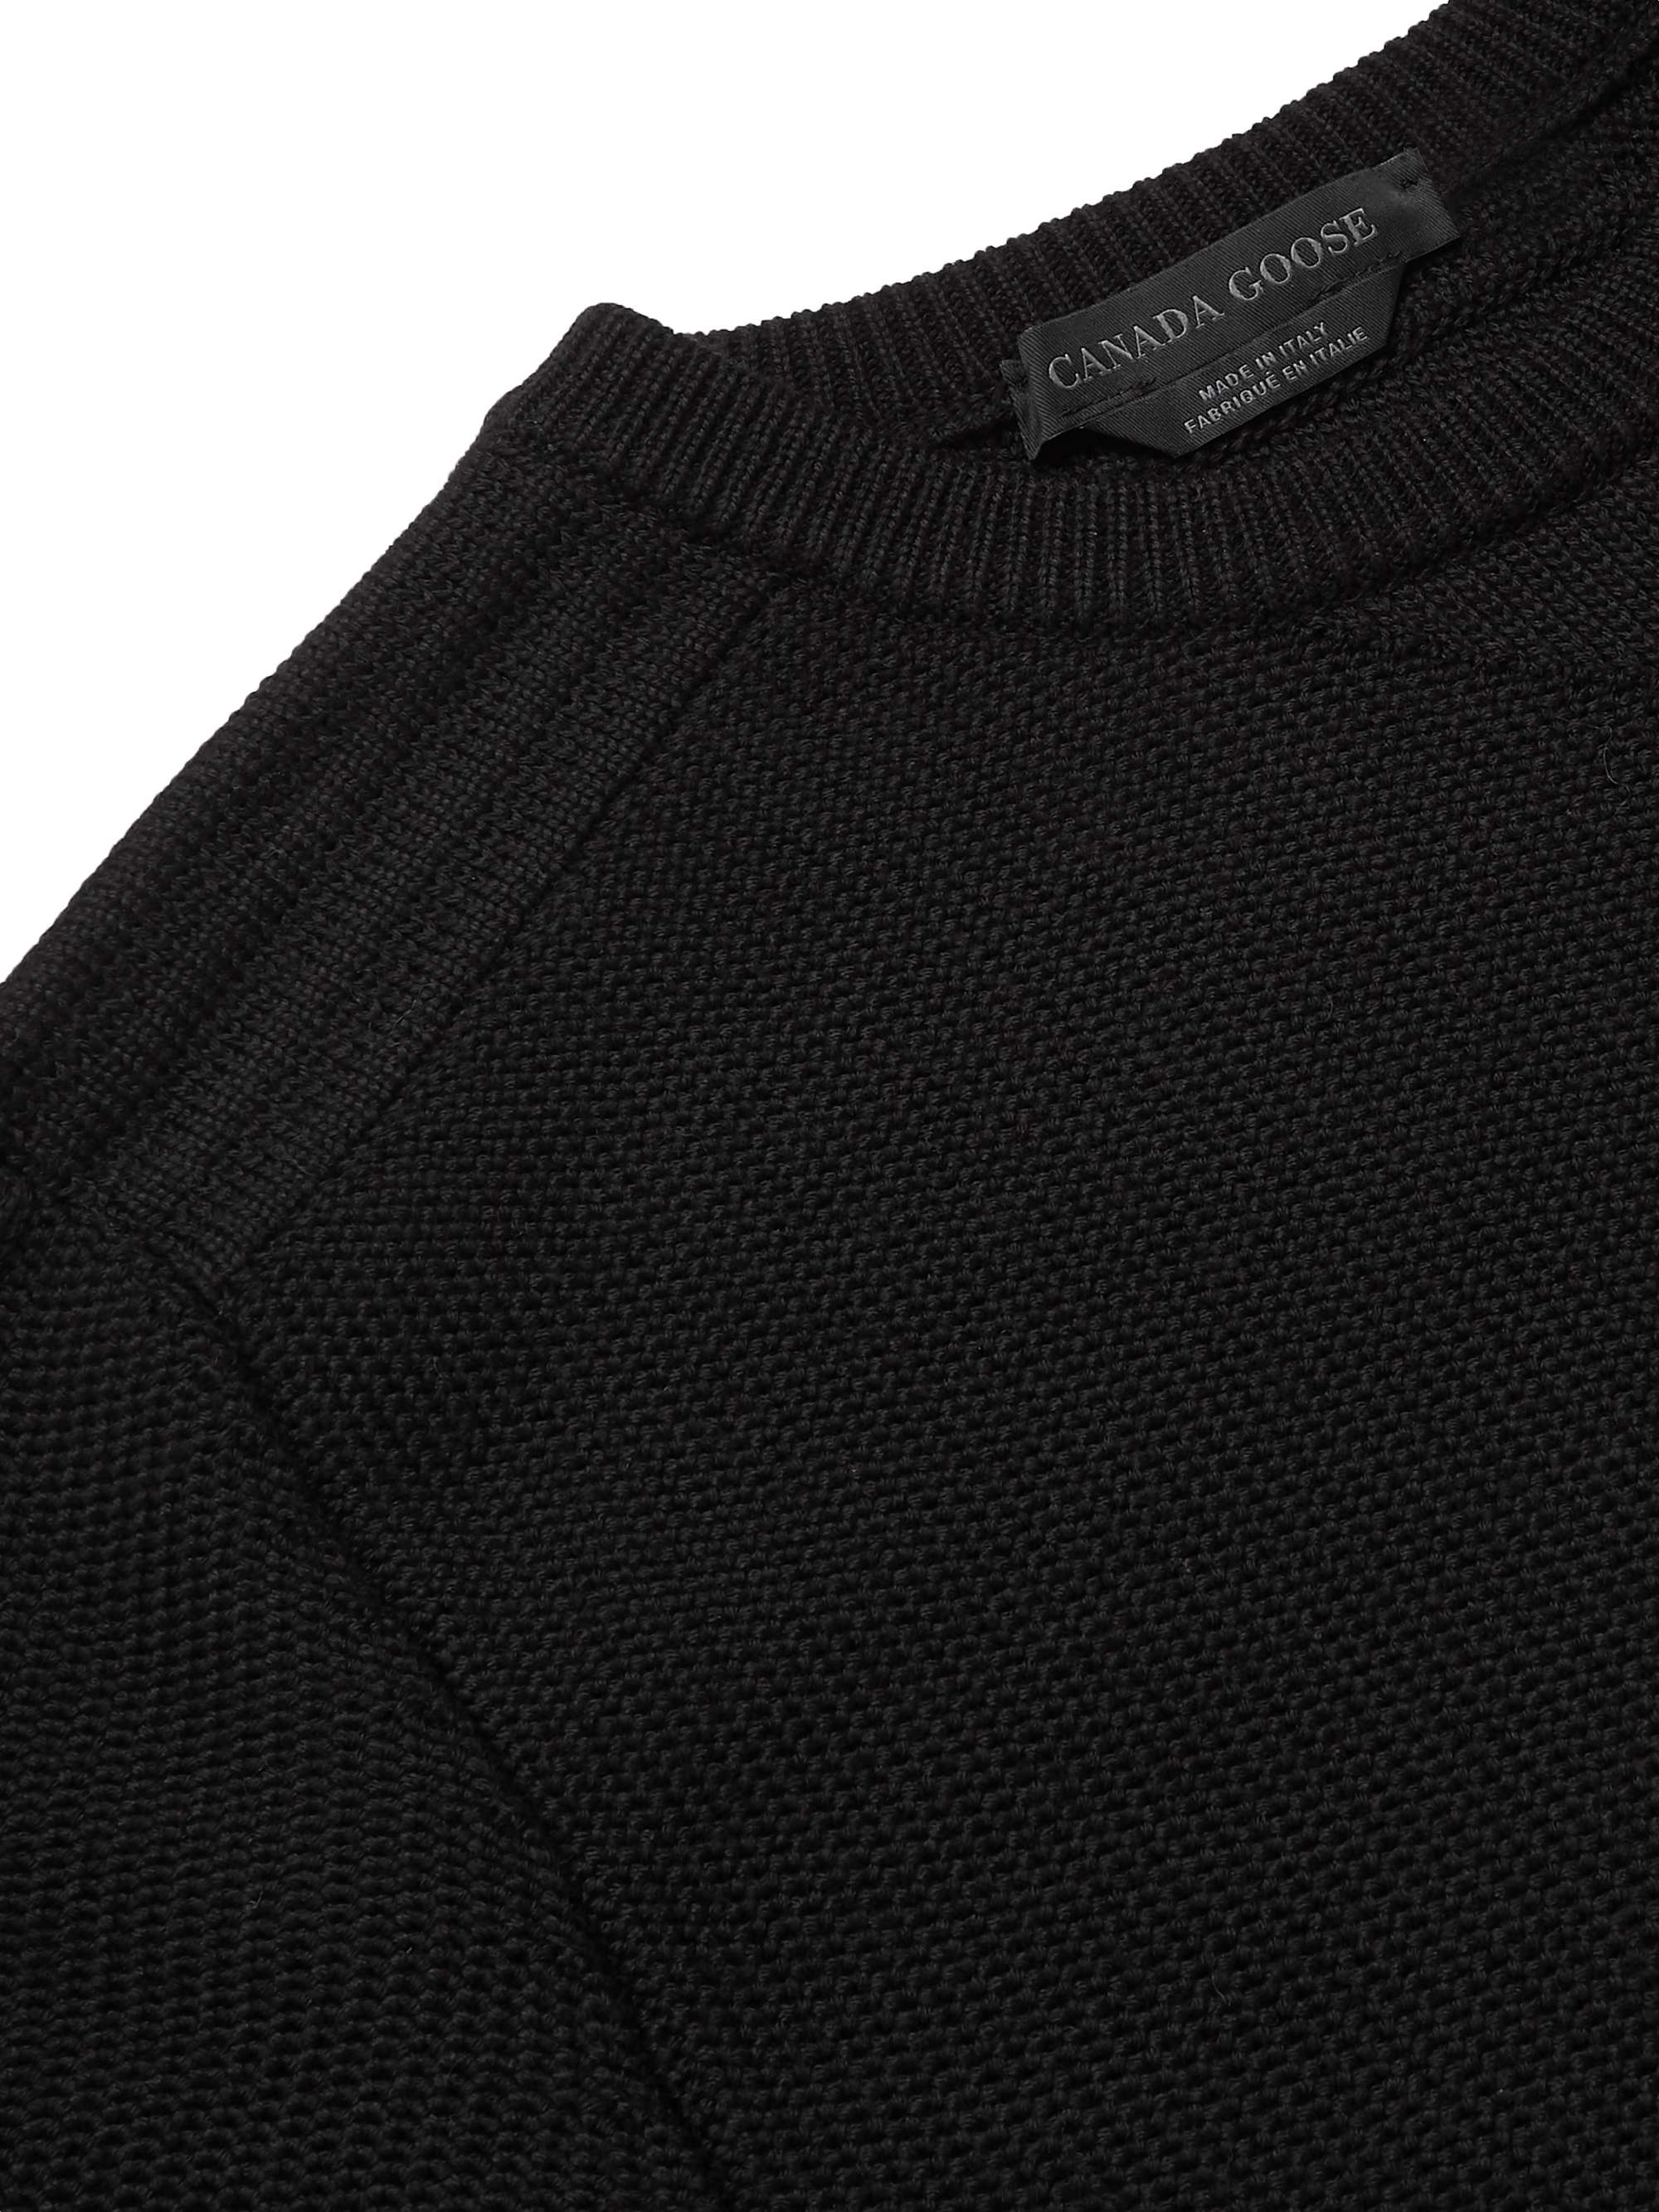 CANADA GOOSE Patterson Merino Wool Sweater for Men | MR PORTER